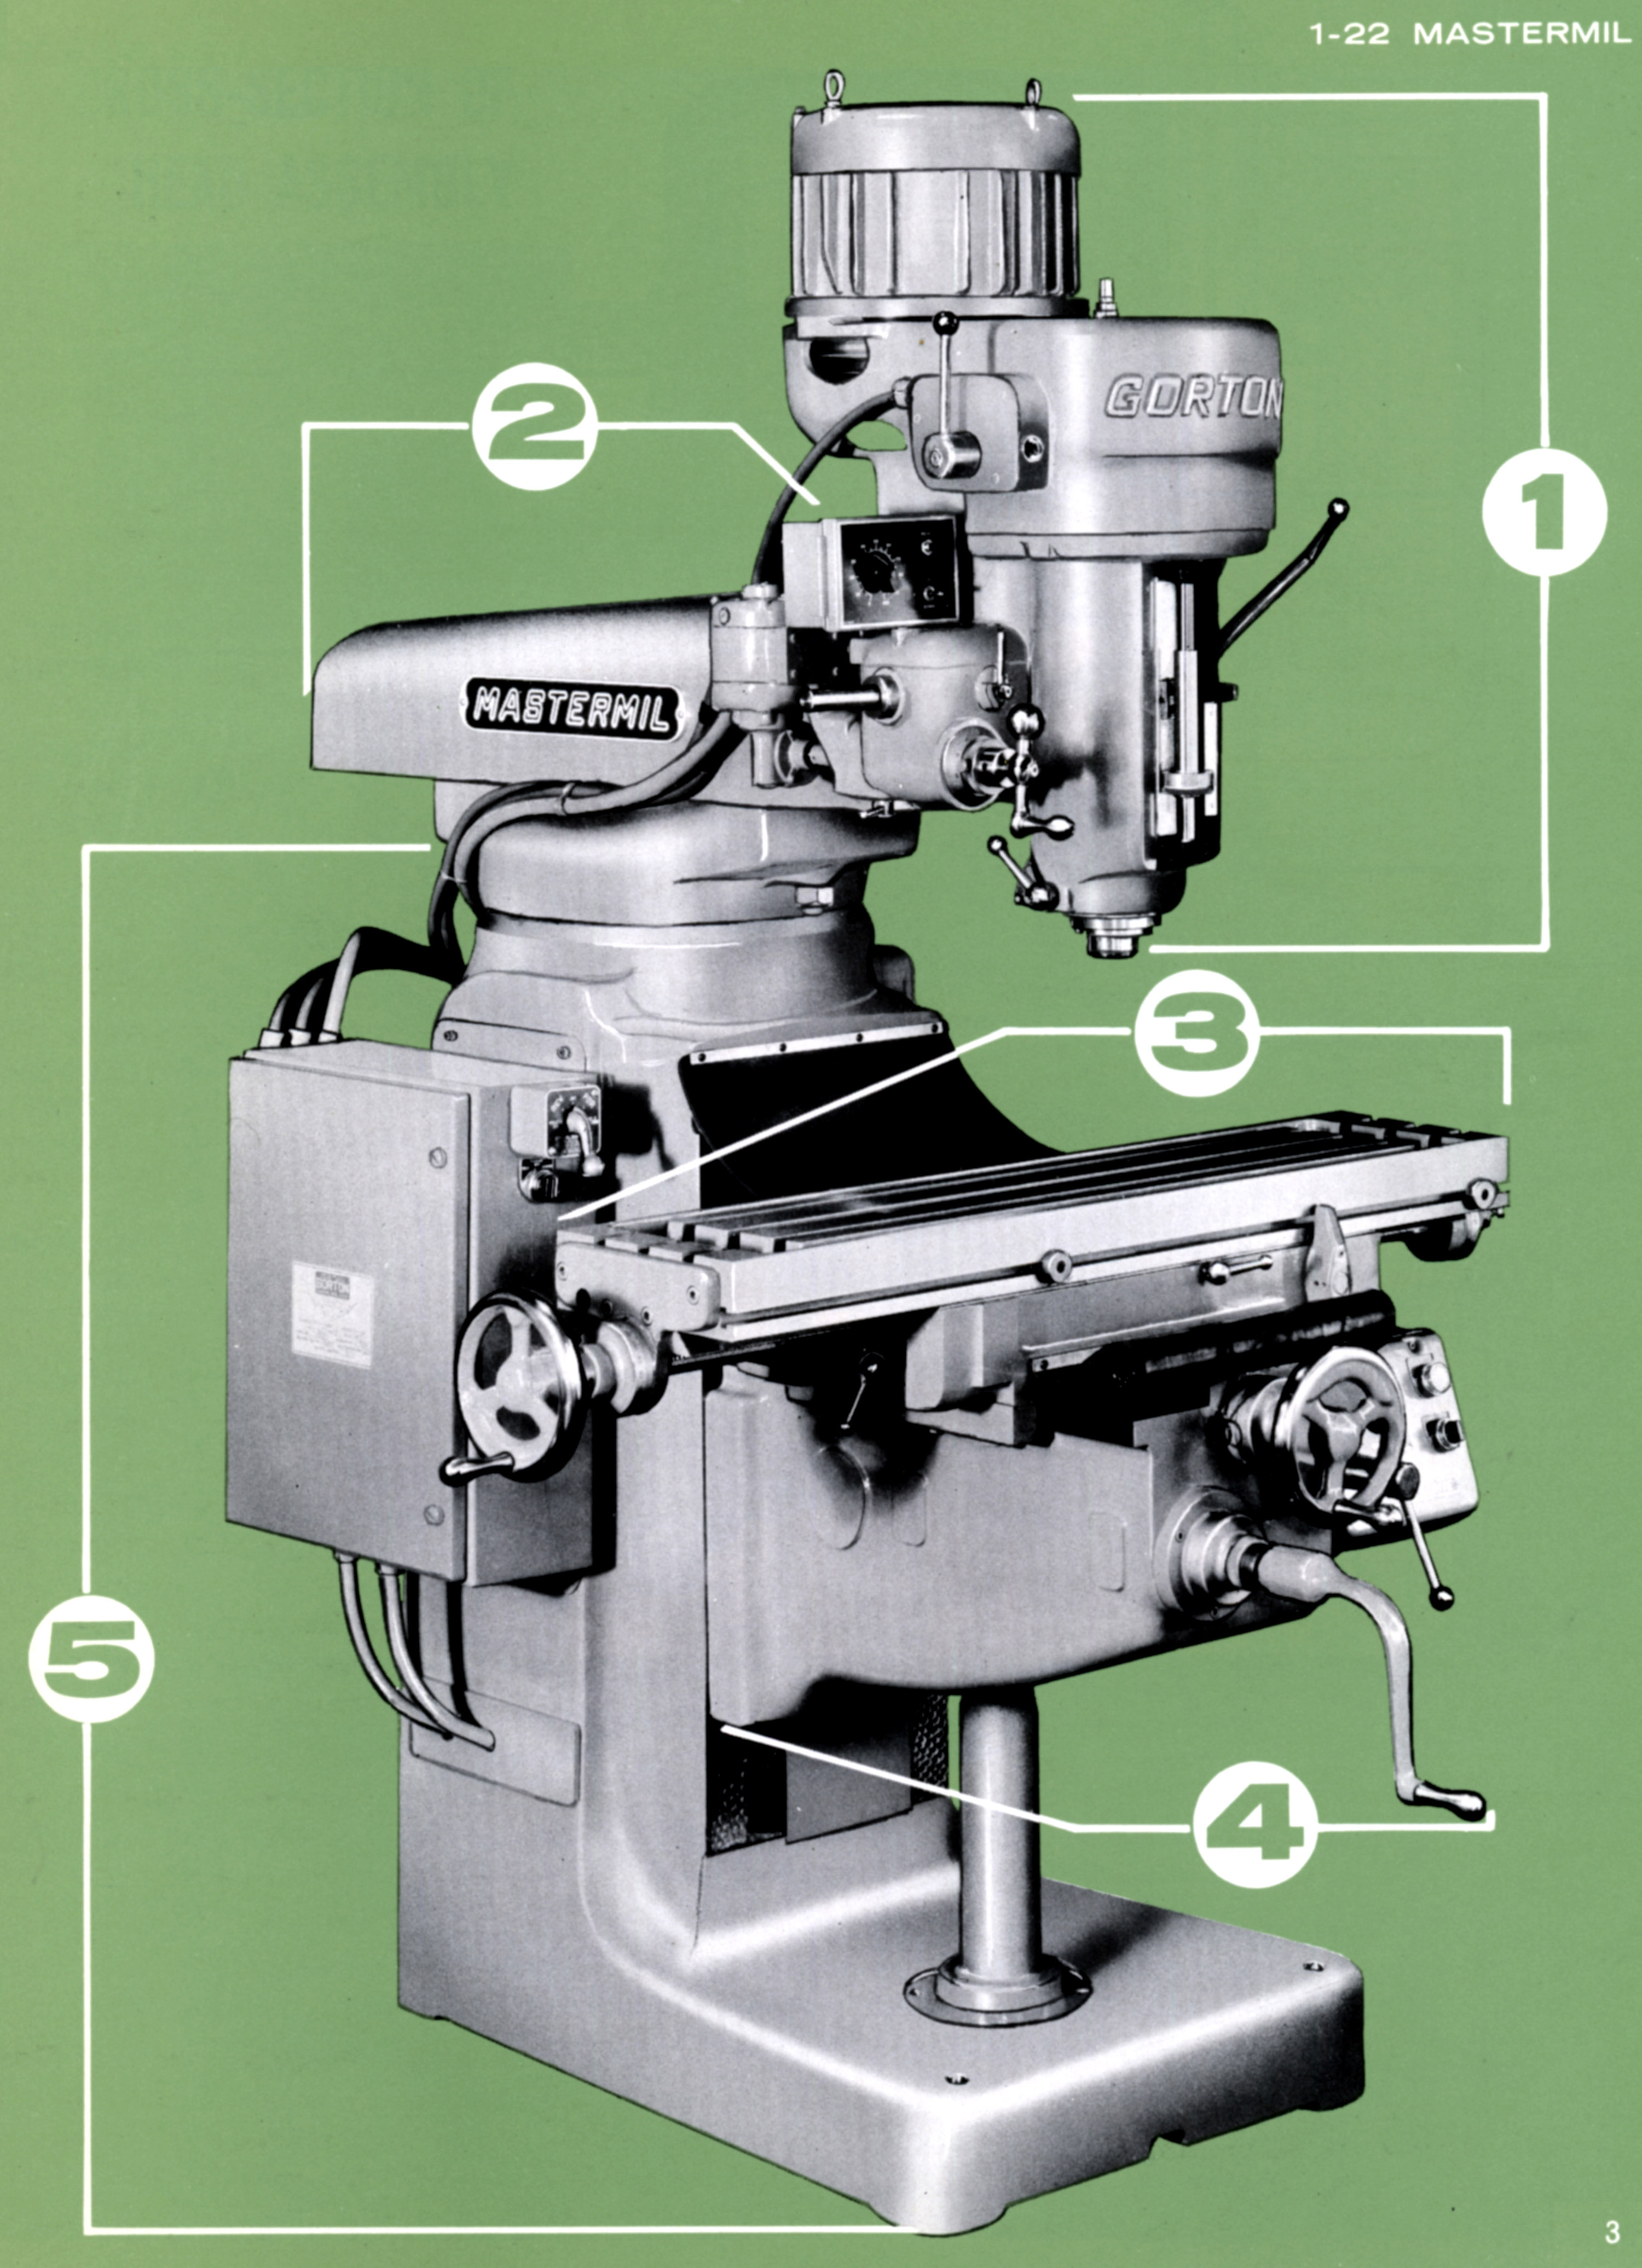 GORTON MACHINE TOOLS GENERAL CATALOG 1655-M 1968 #RR591 Milling Machine Grinders 